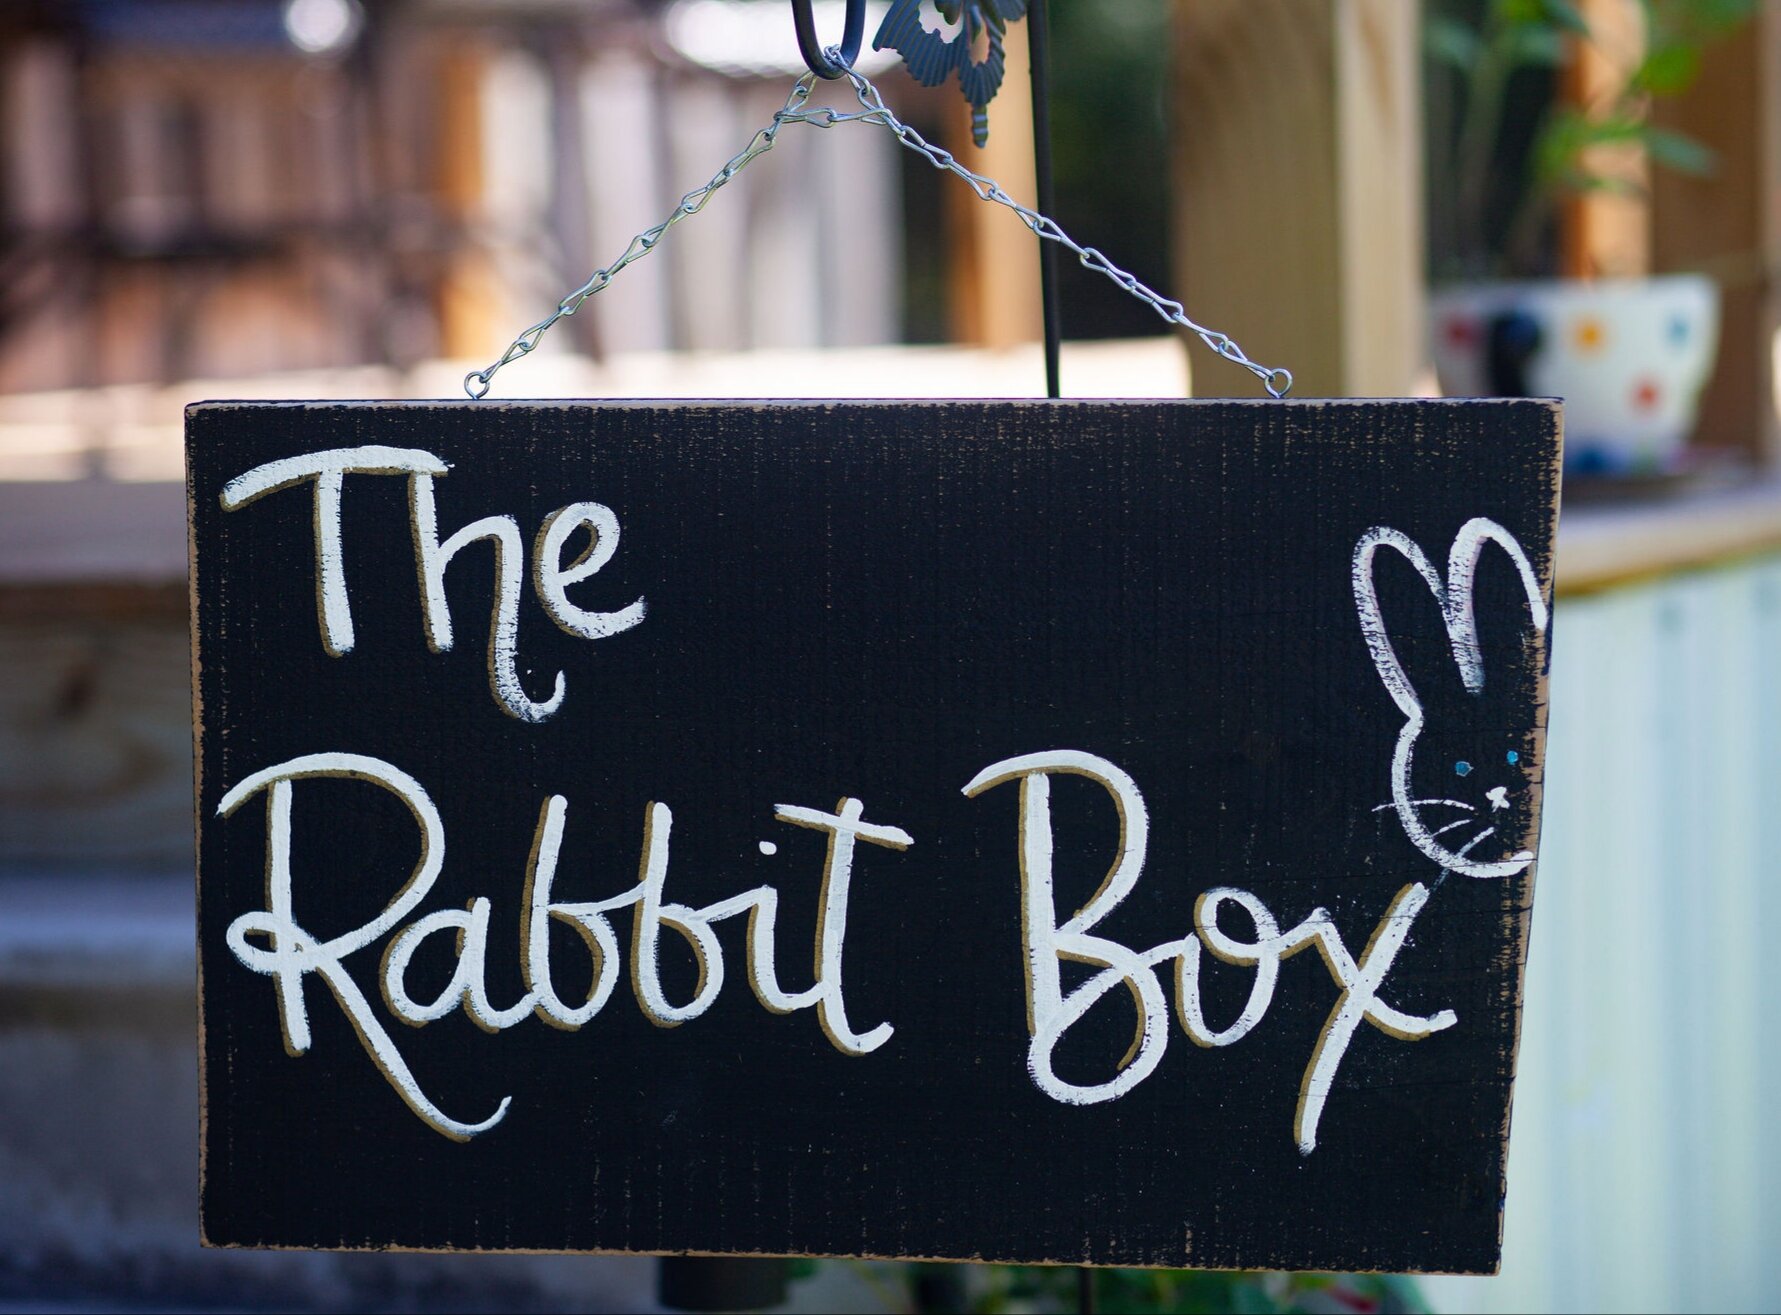 The Rabbit Box sign